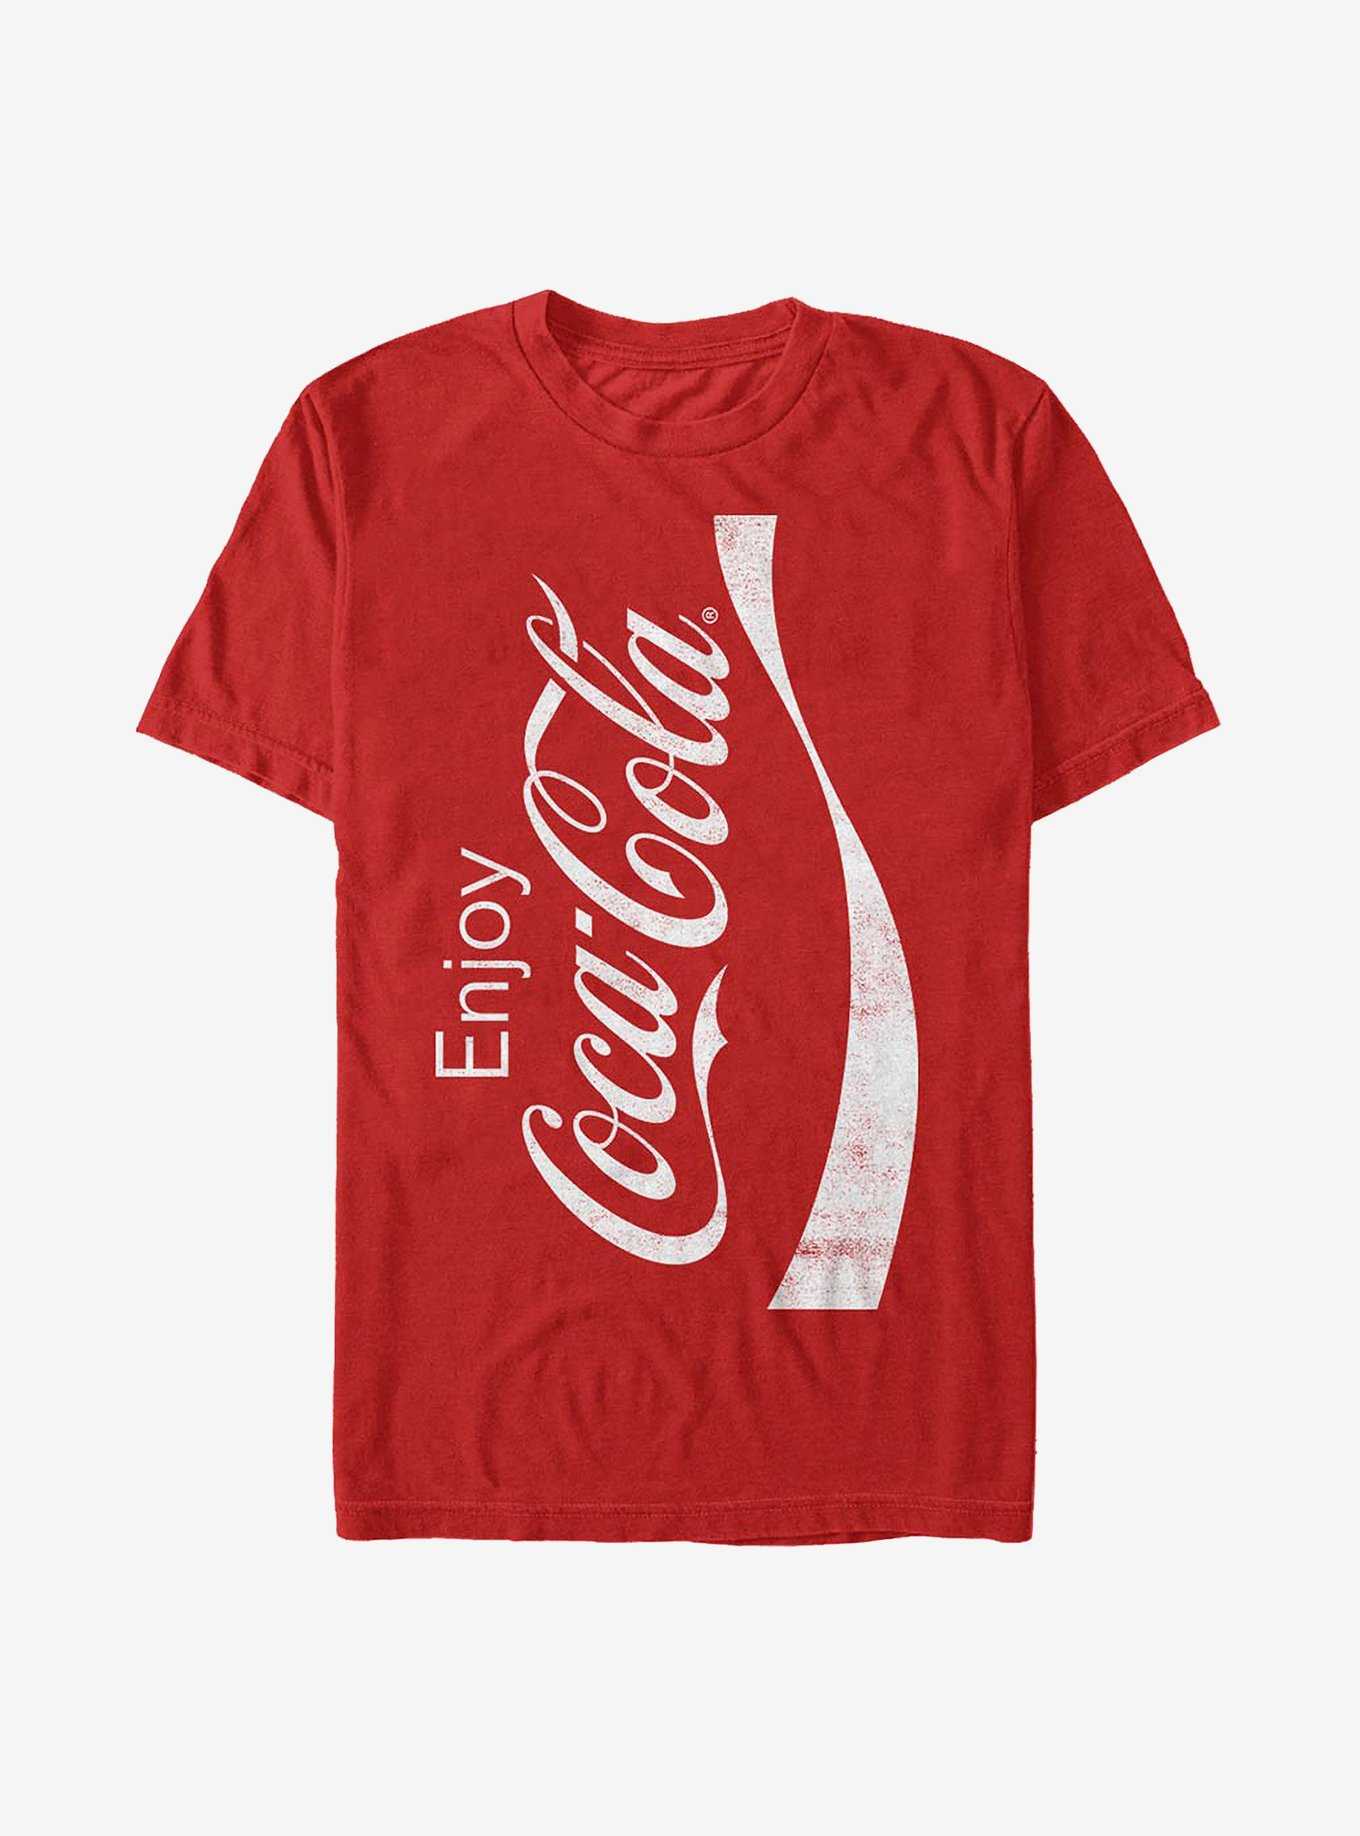 Coke Canned T-Shirt, , hi-res